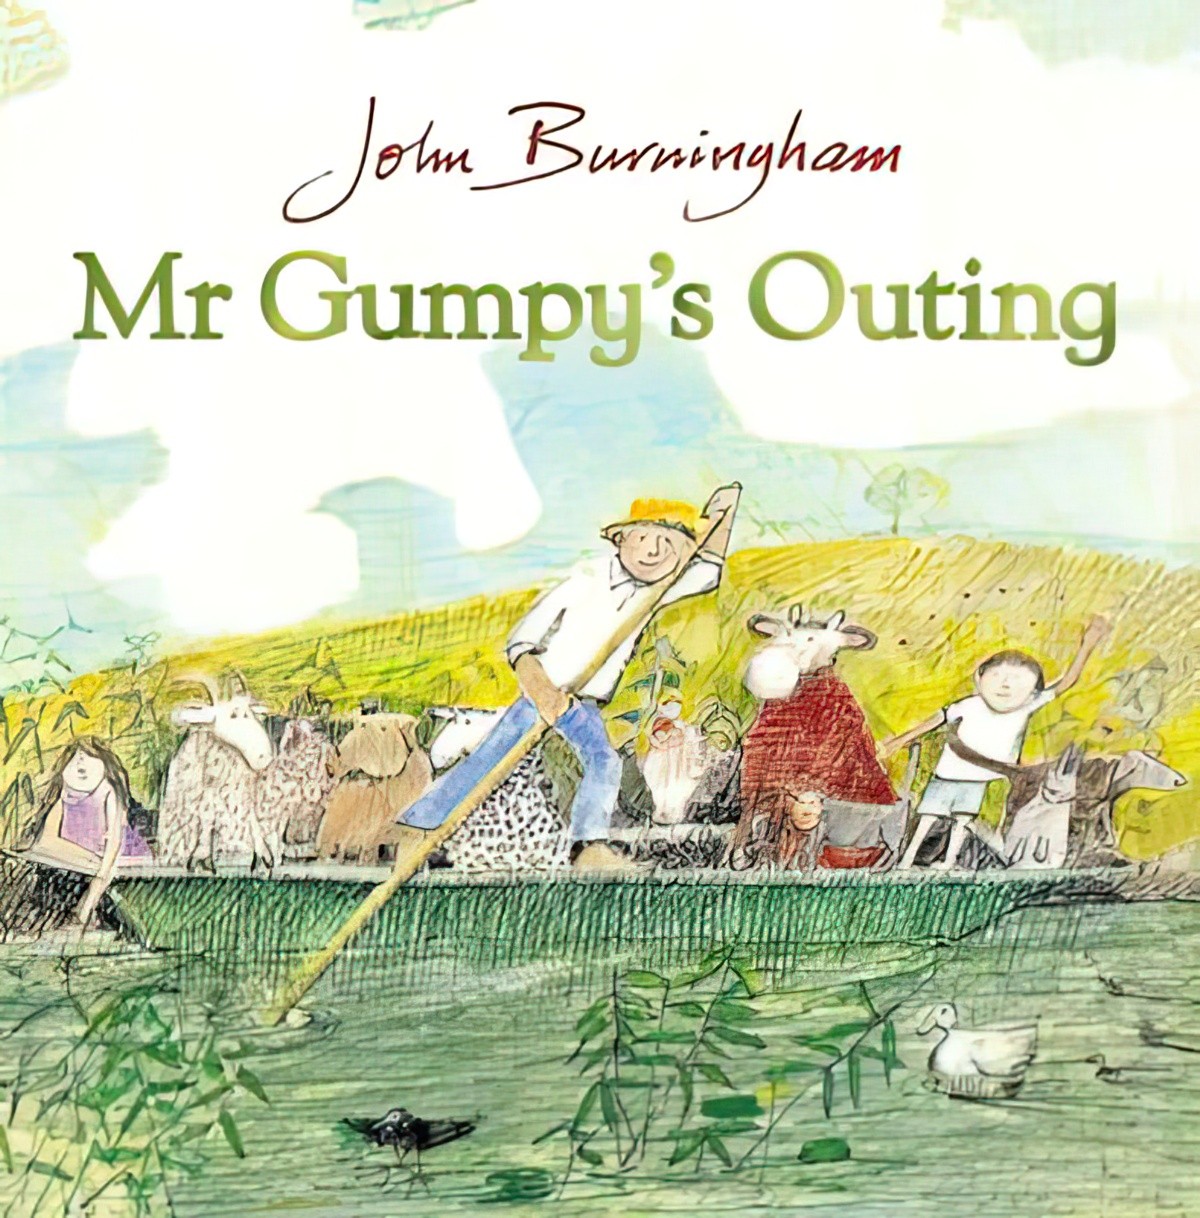 Mr Gumpy’s Outing by John Burningham Analysis